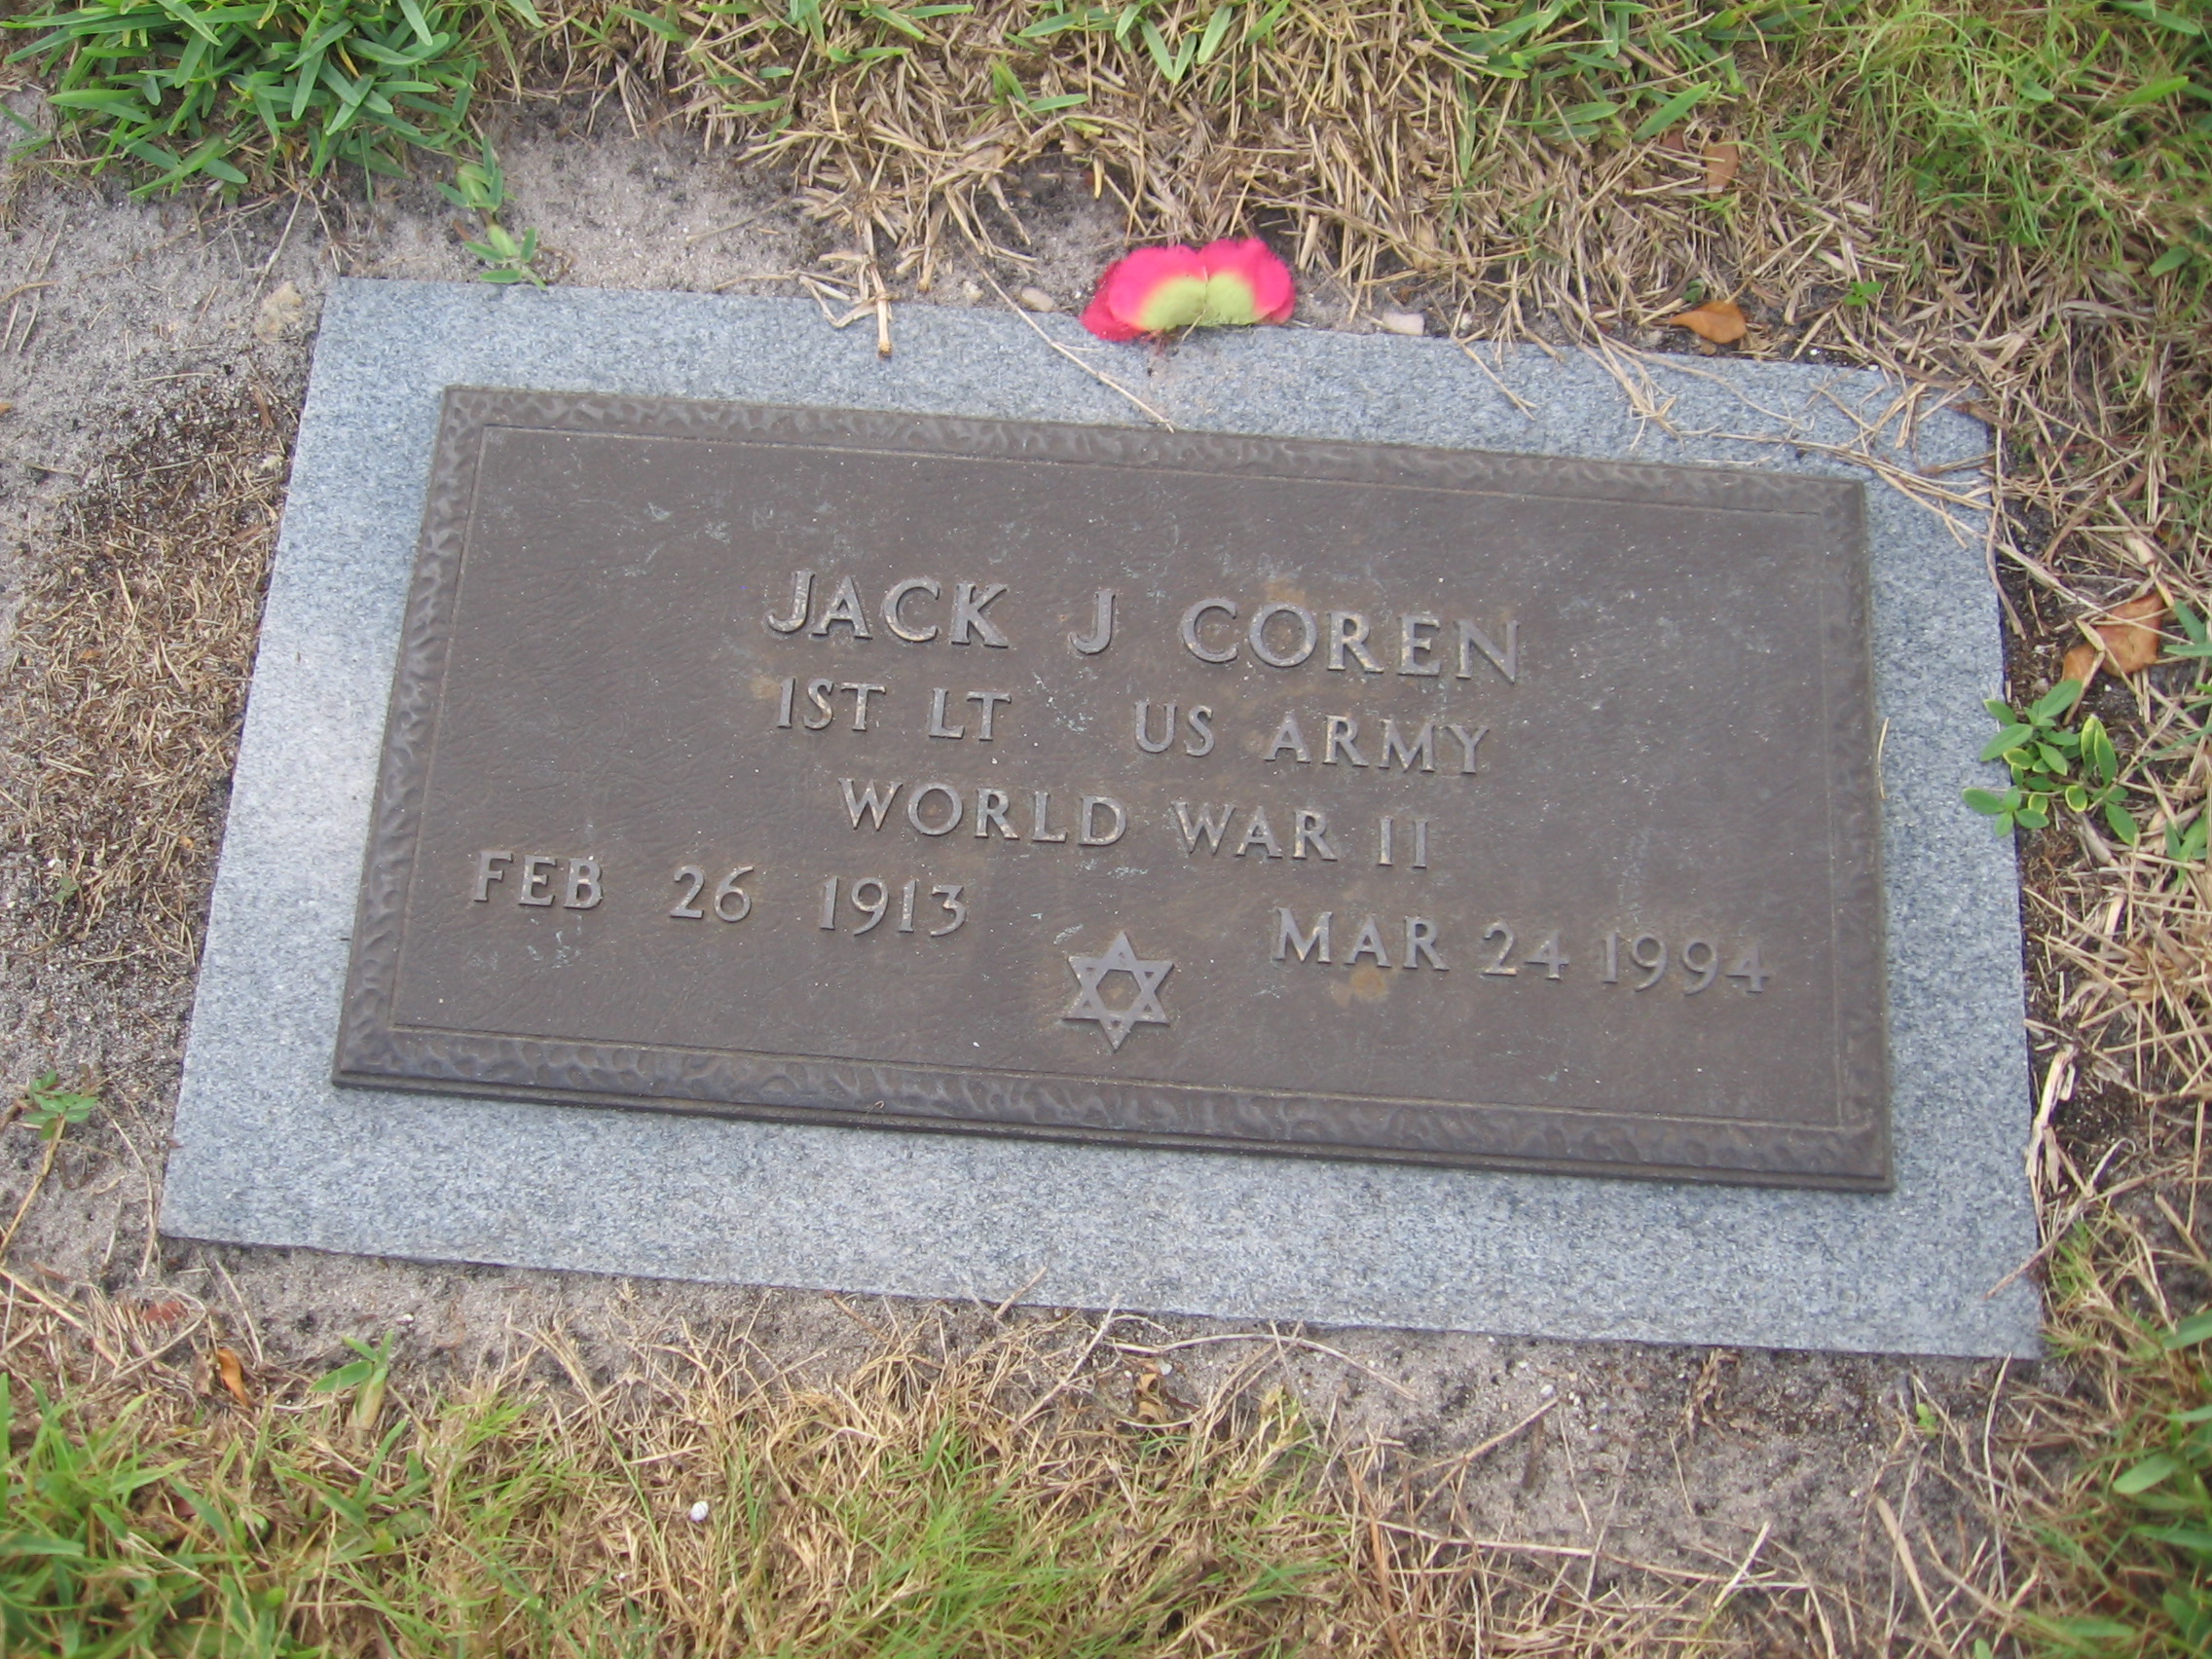 Lieut Jack J Coren